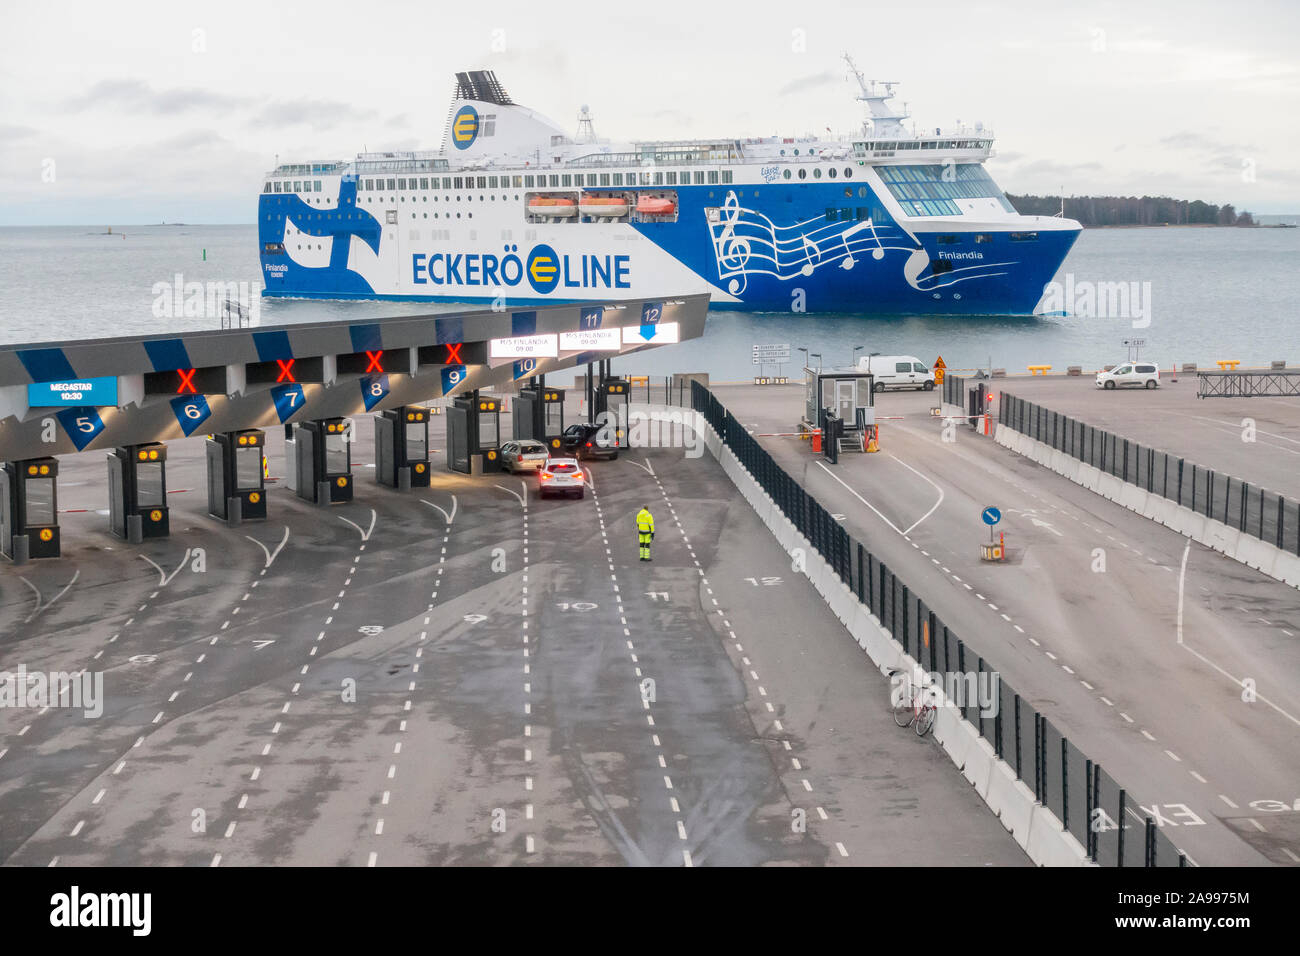 Eckerö line ferry from Tallinn approaching West terminal passenger terminal in Helsinki Finland Stock Photo